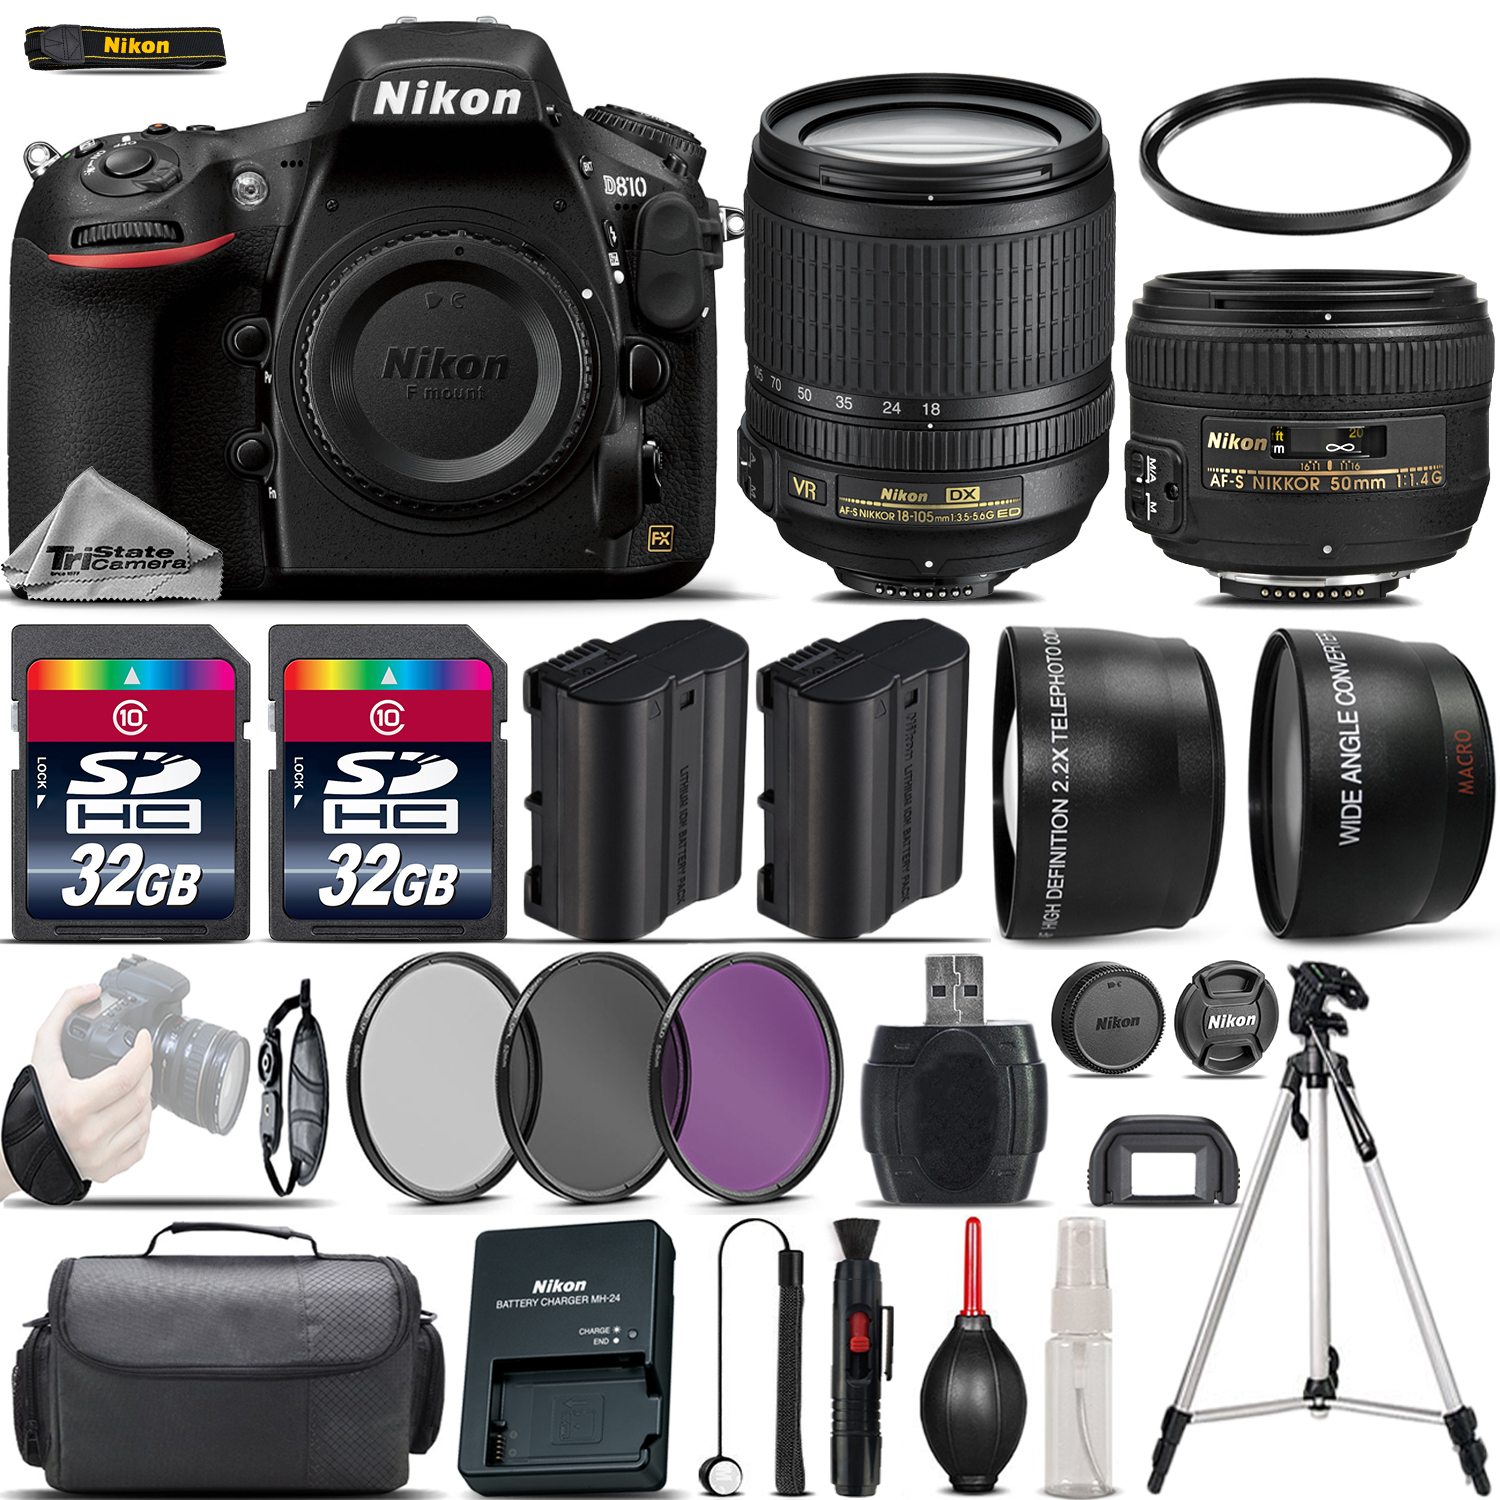 D810 Digital SLR Camera + 18-105mm VR + 50mm 1.4G Lens + 64GB -4 Lens Kit *FREE SHIPPING*